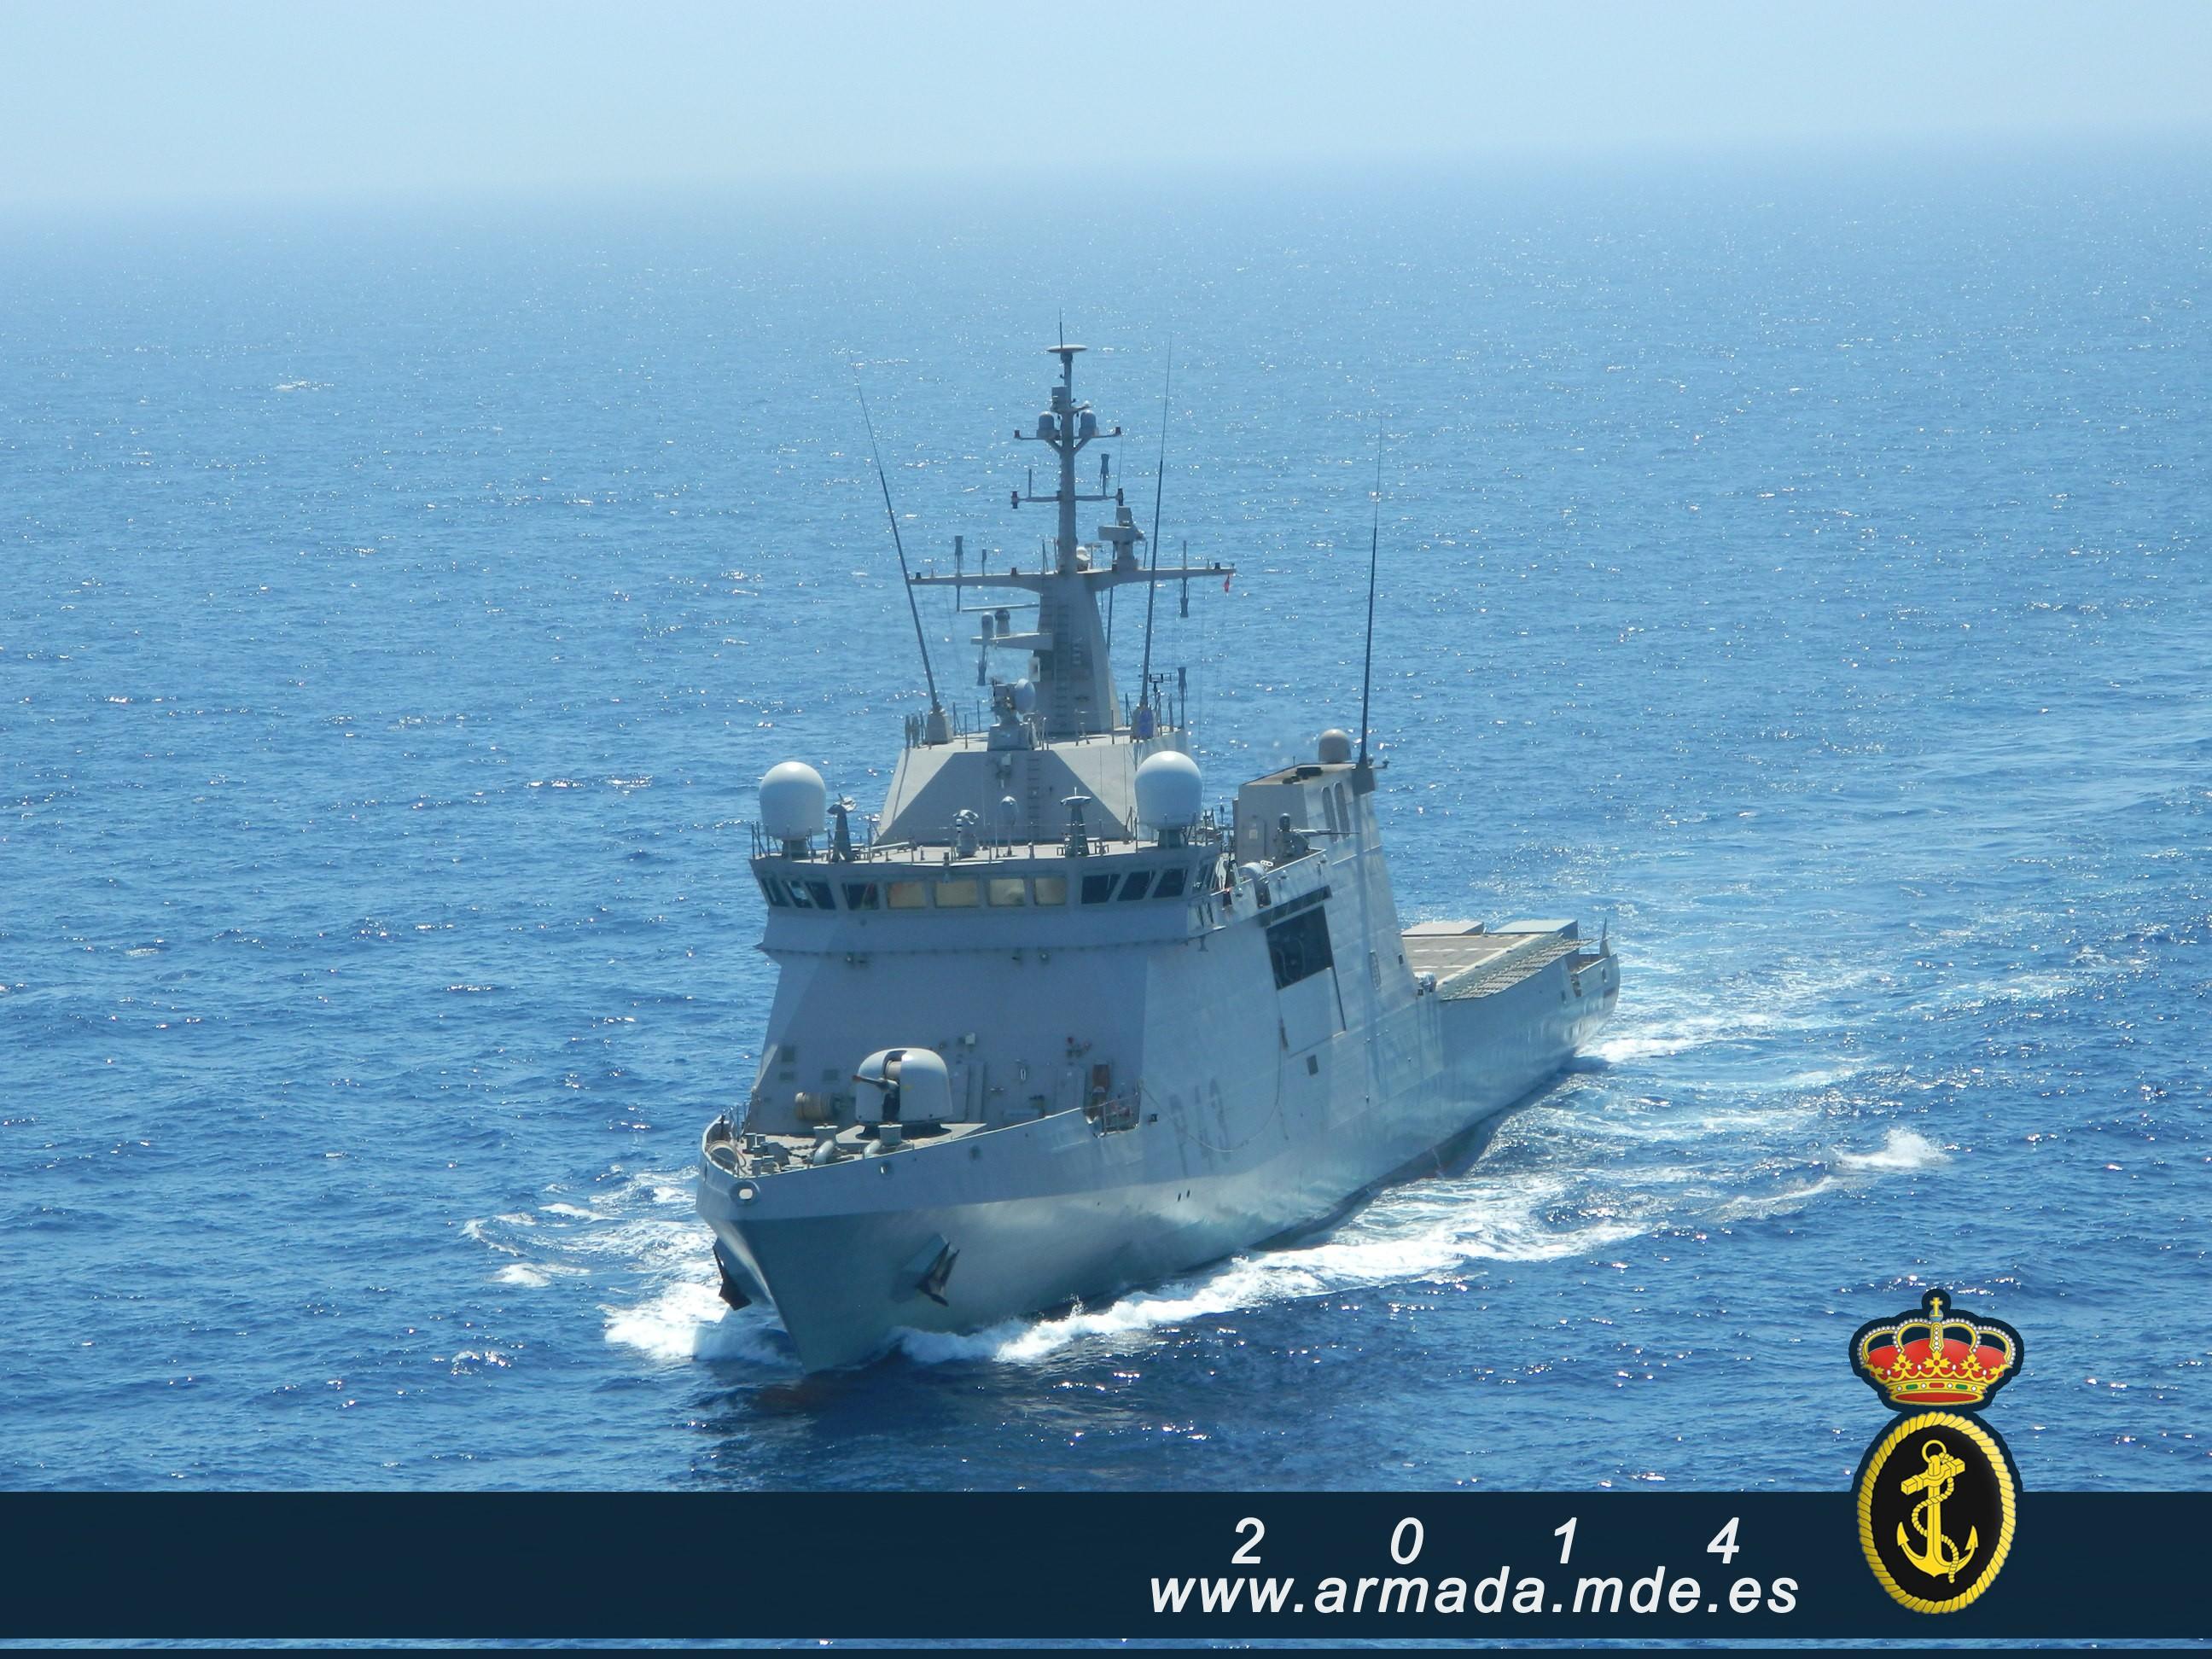 The ‘Relámpago’ is the third ‘Meteoro’-class oceanic patrol vessel